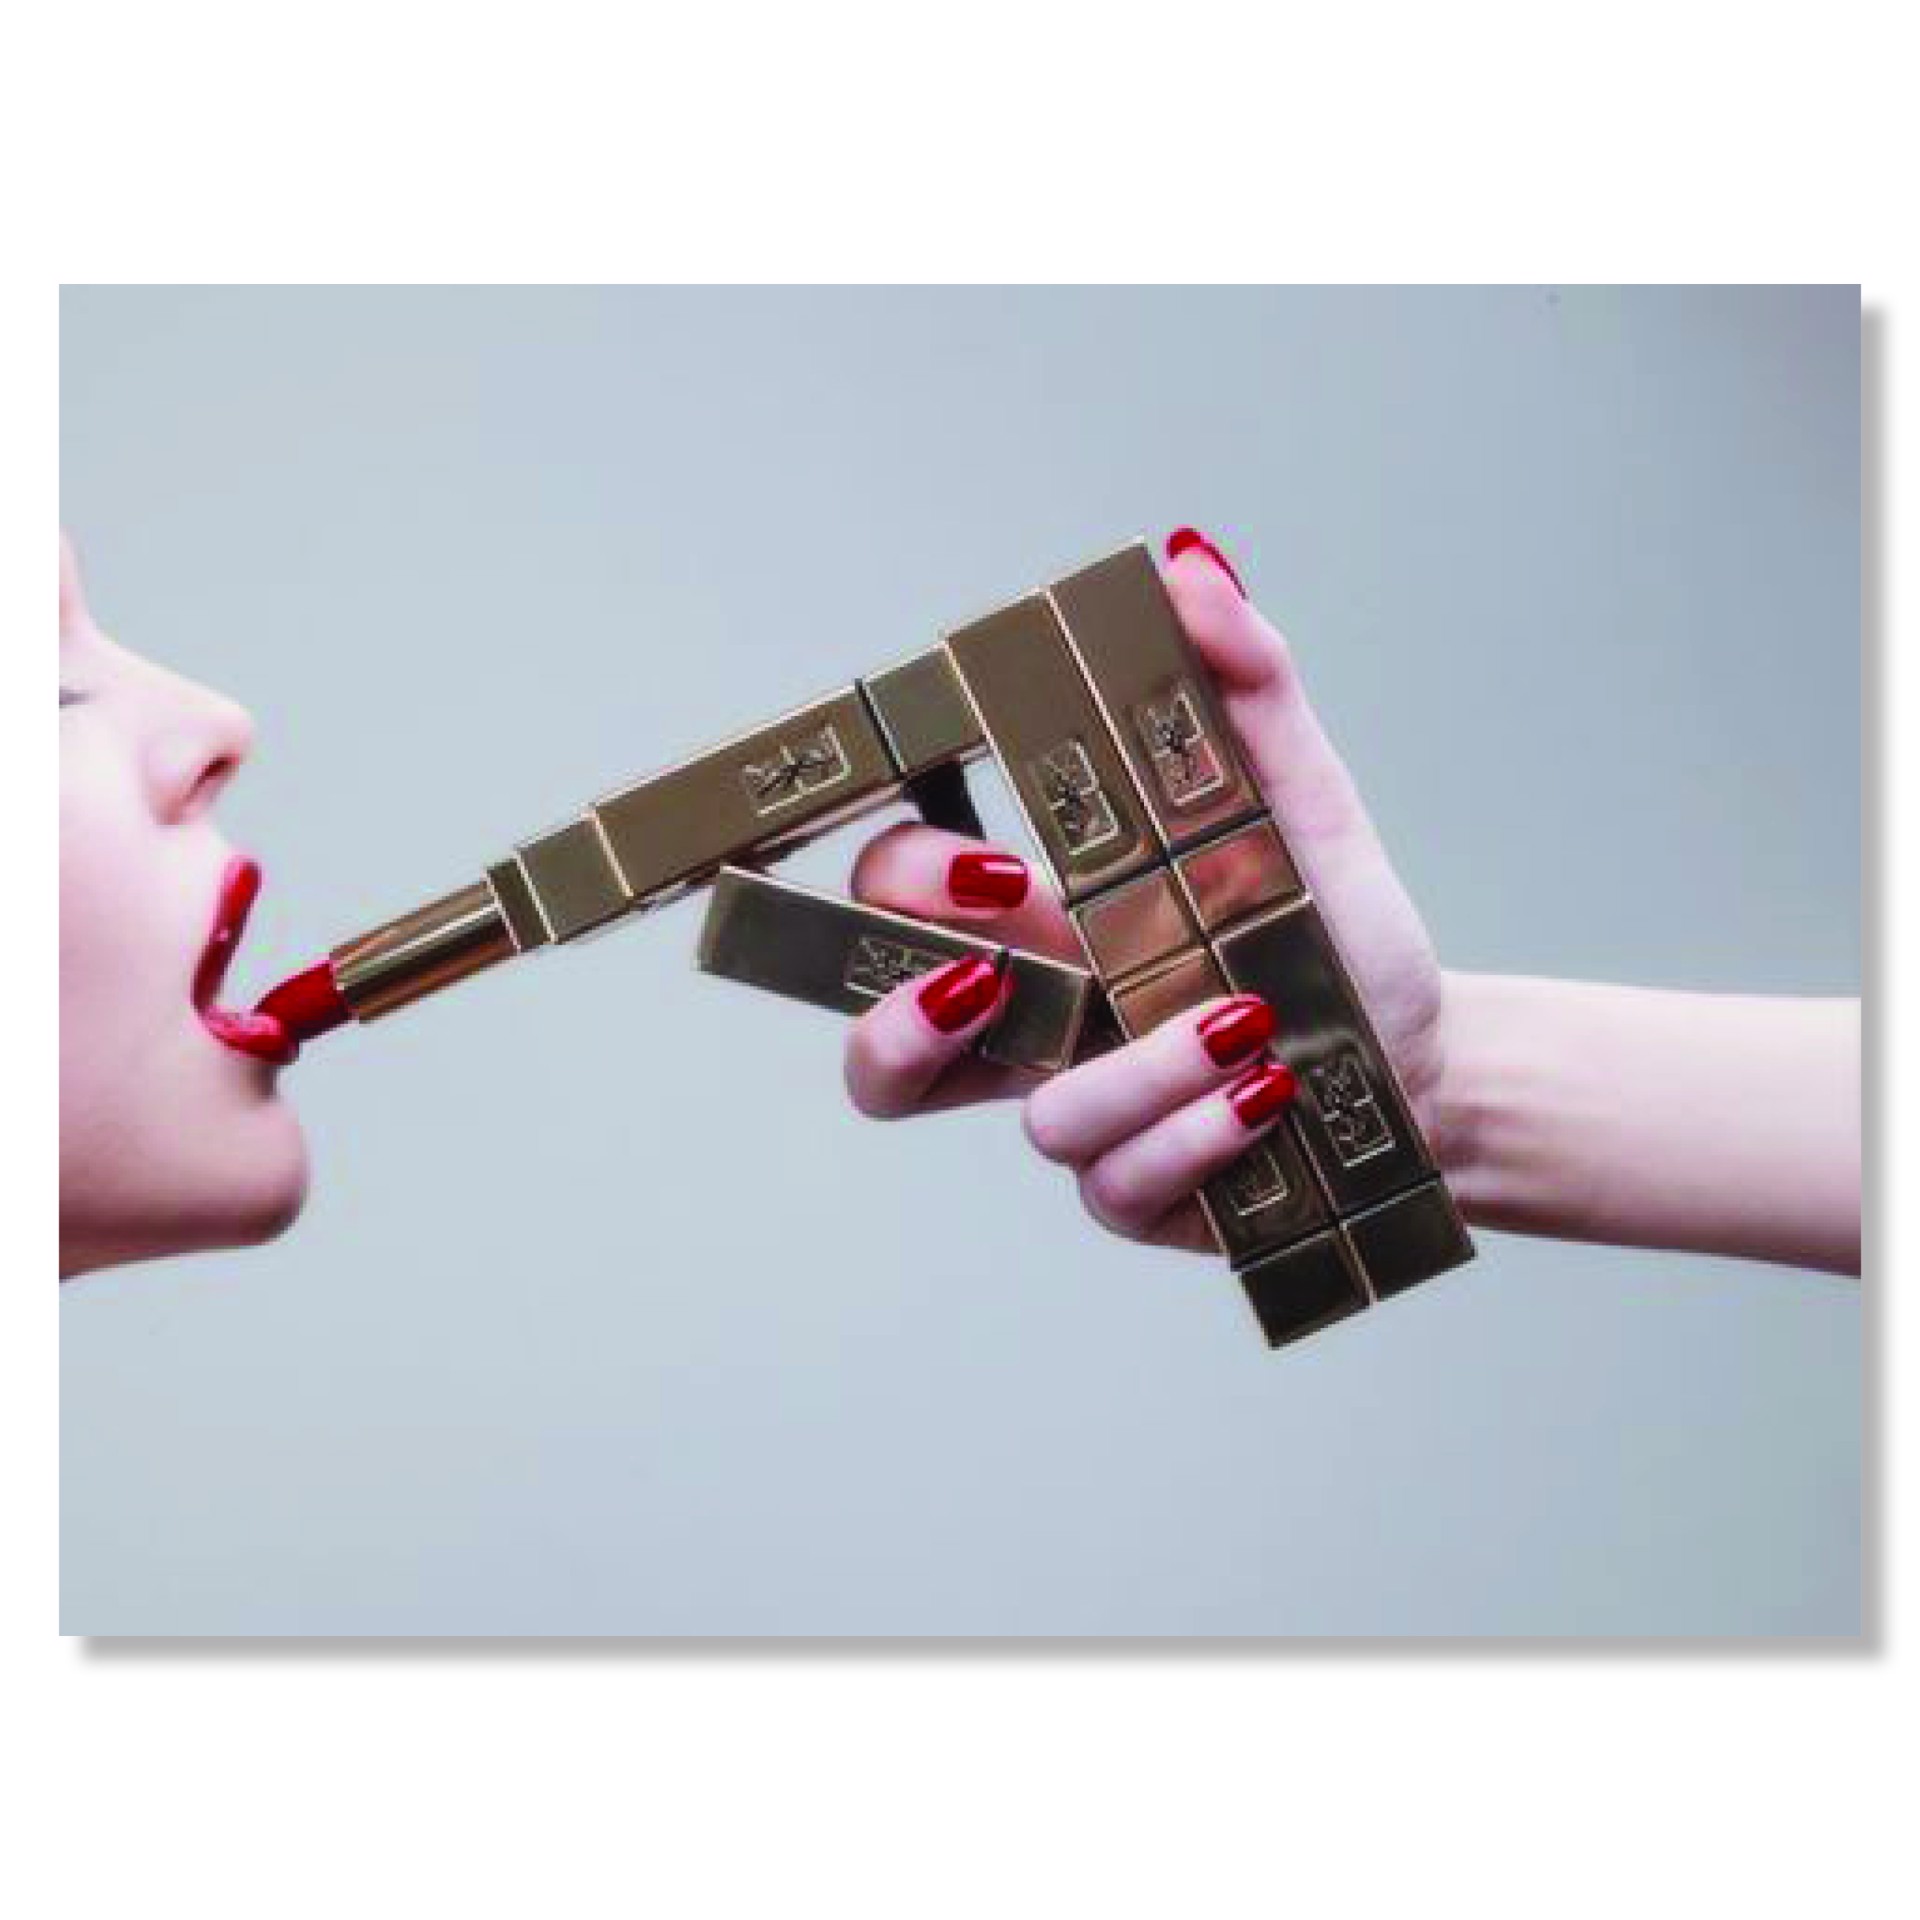 YSL Lipstick Gun by Tyler Shields